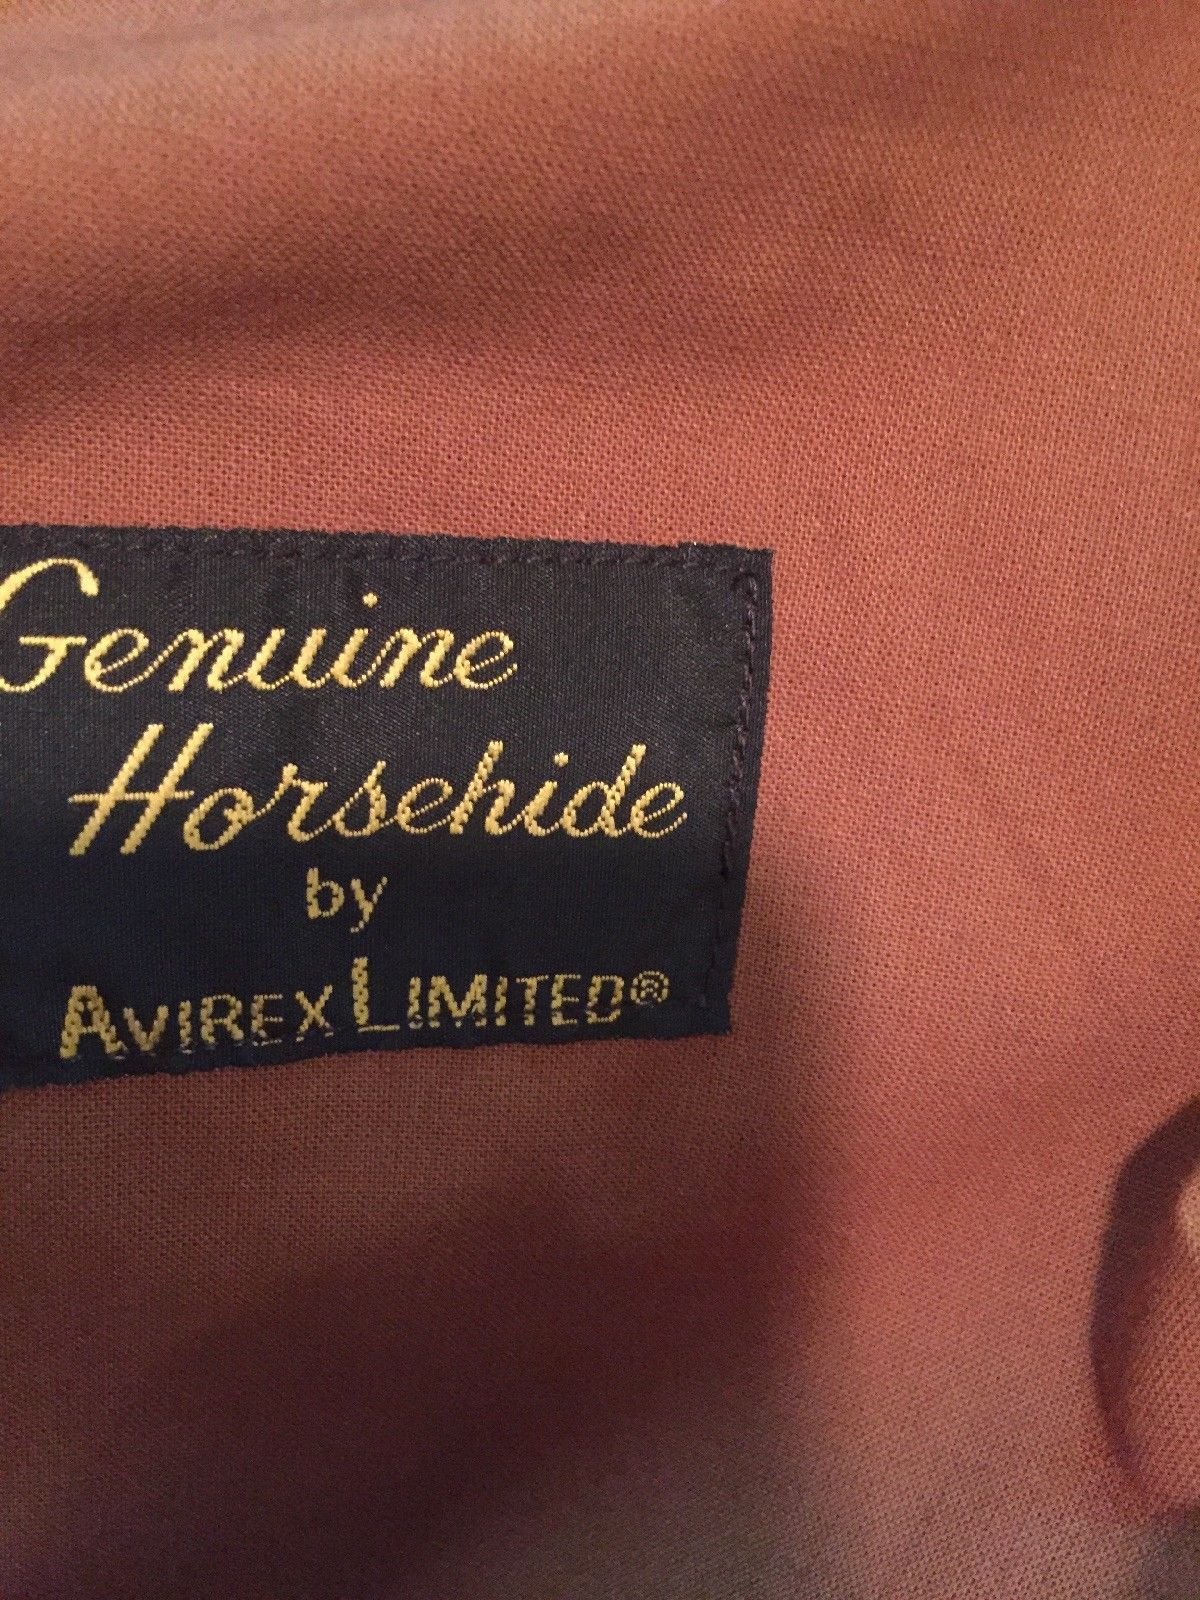 Avirex A Horsehide label.jpg